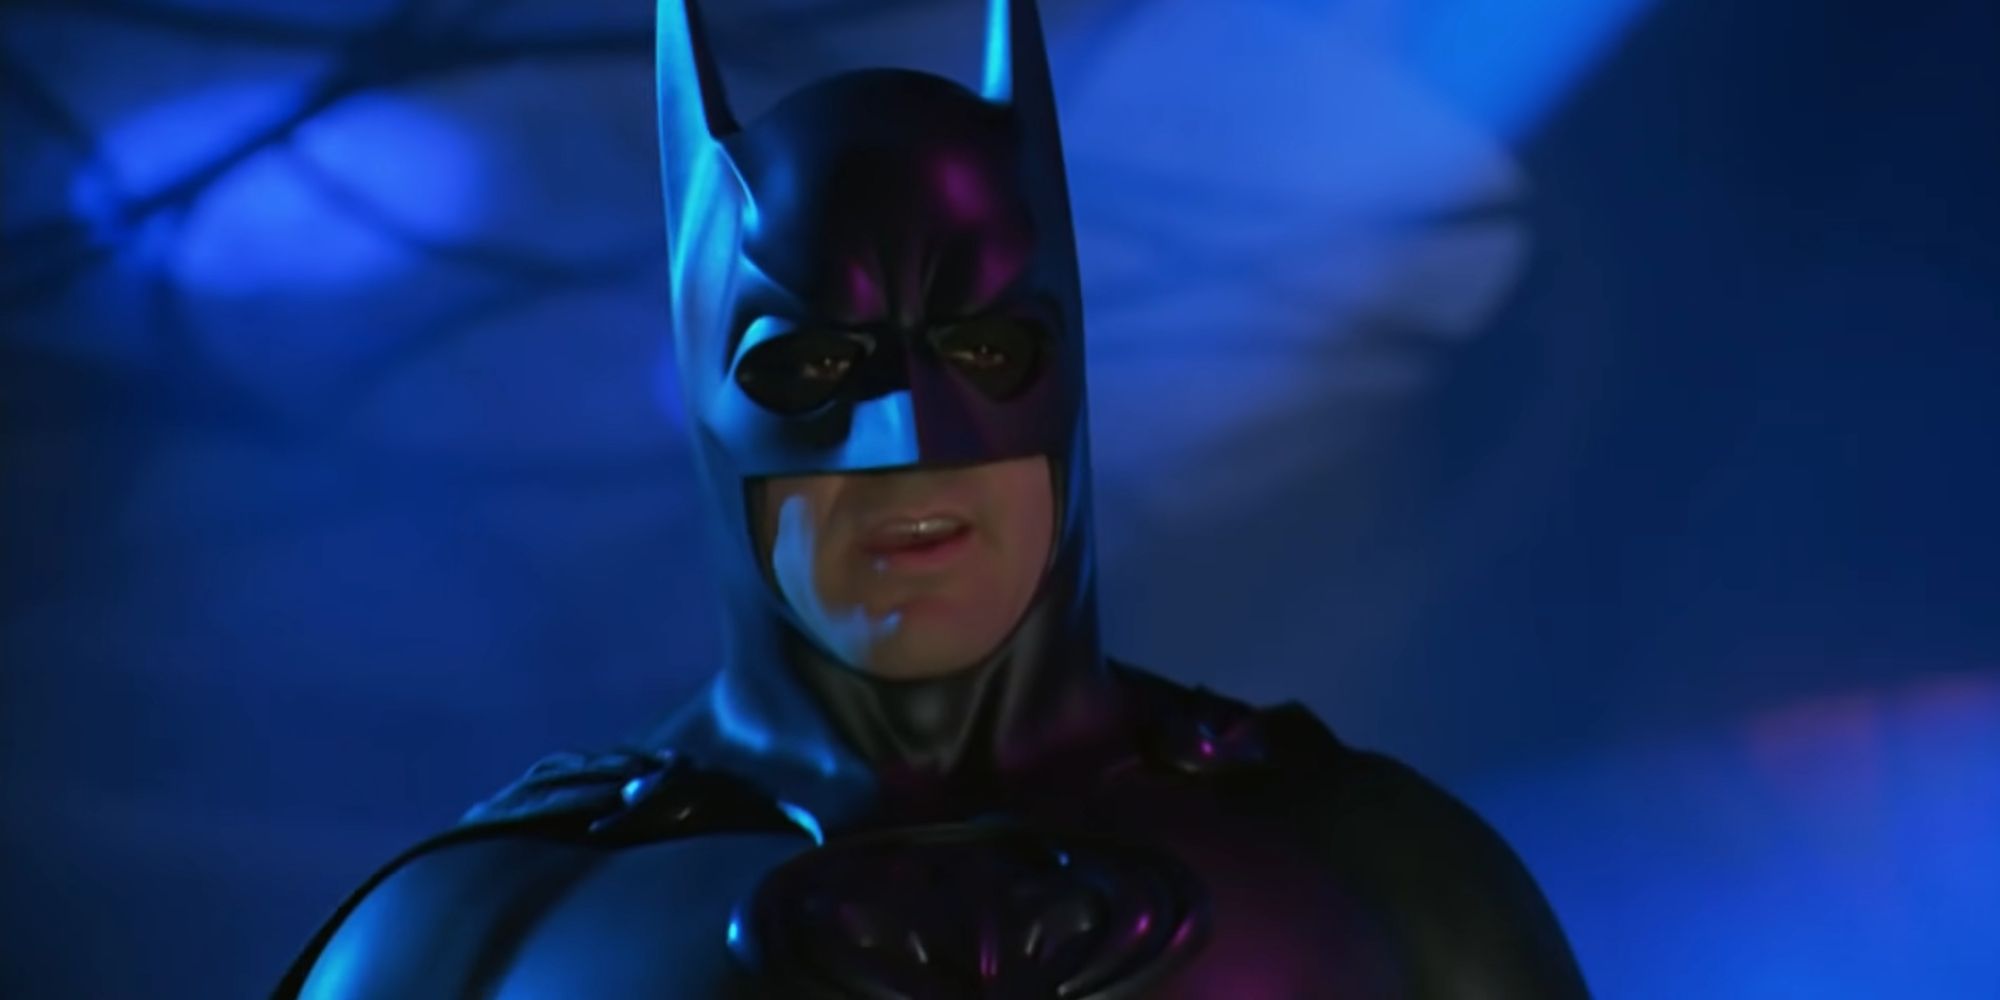 George Clooney as Batman making his entrance in Batman &amp; Robin